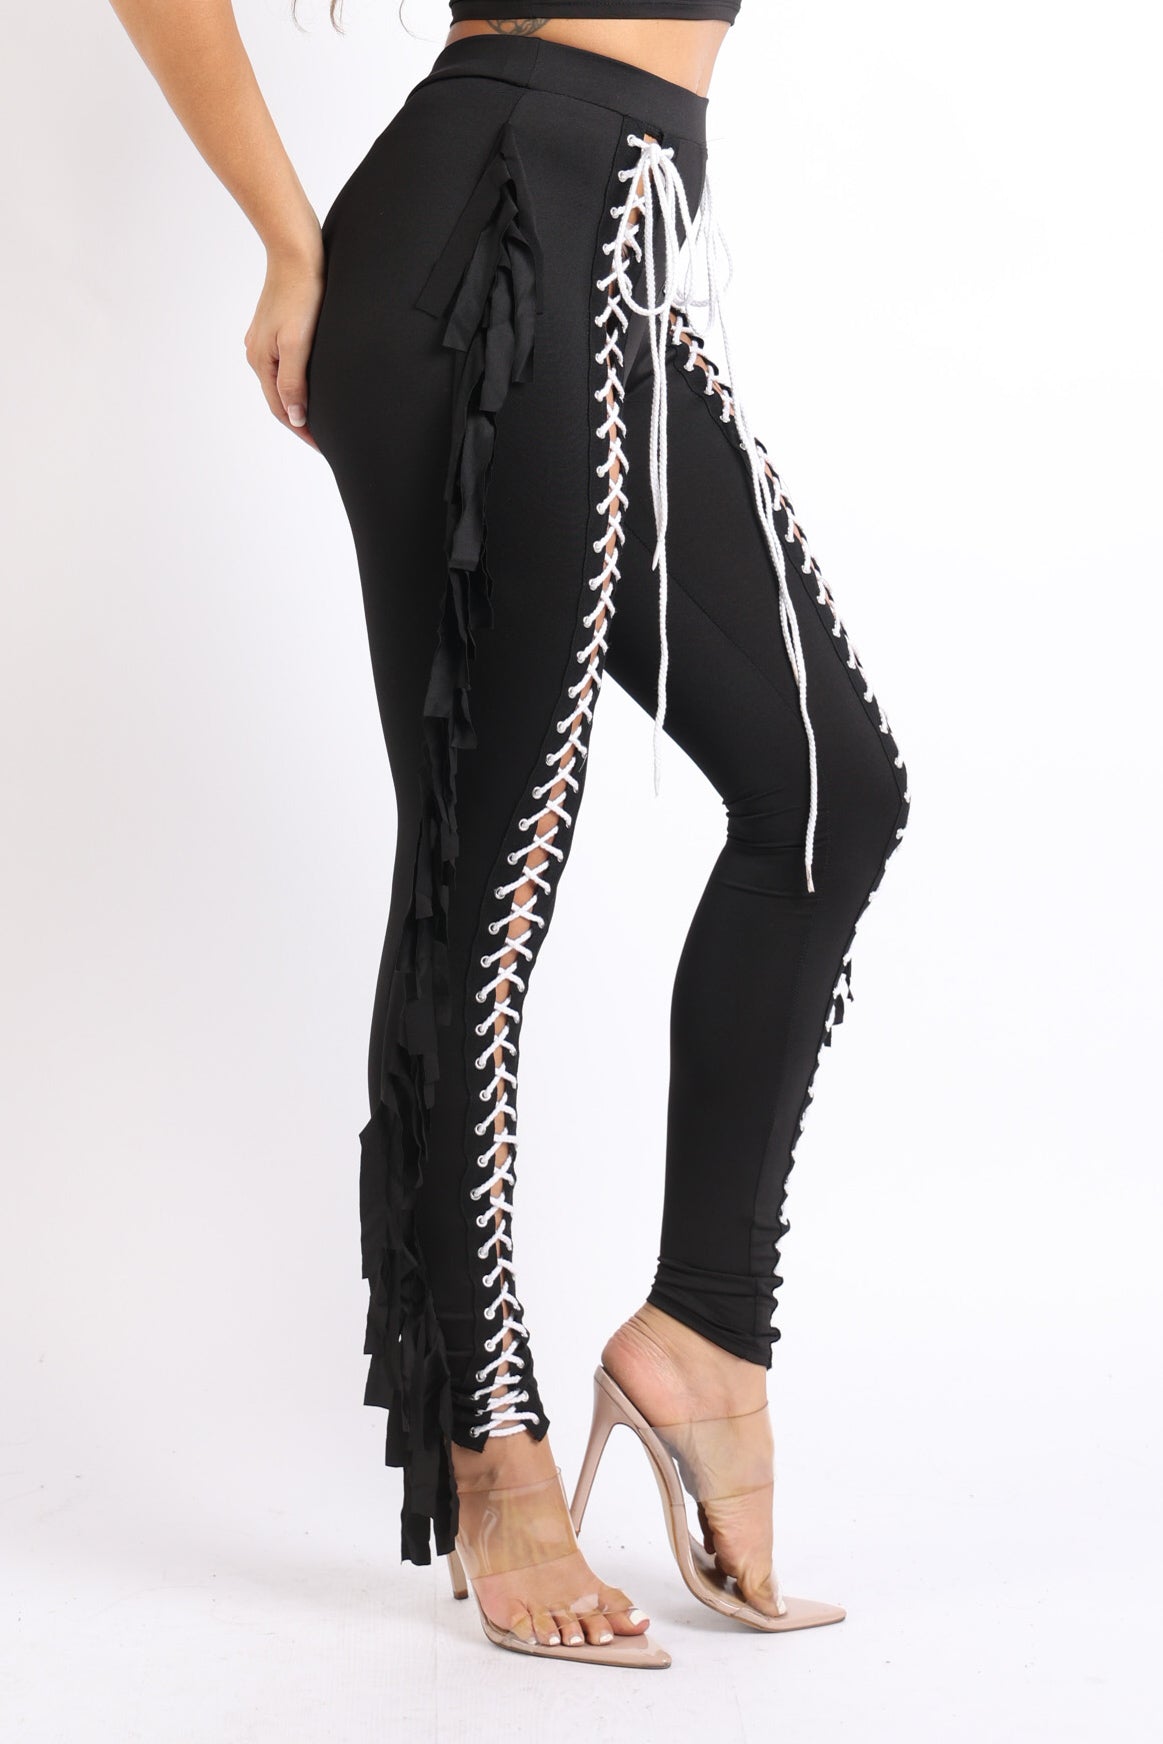 Chic Lace up Detailed Fringe Tassel Pants Leggings BLACK Raspberry Smoke Online Store